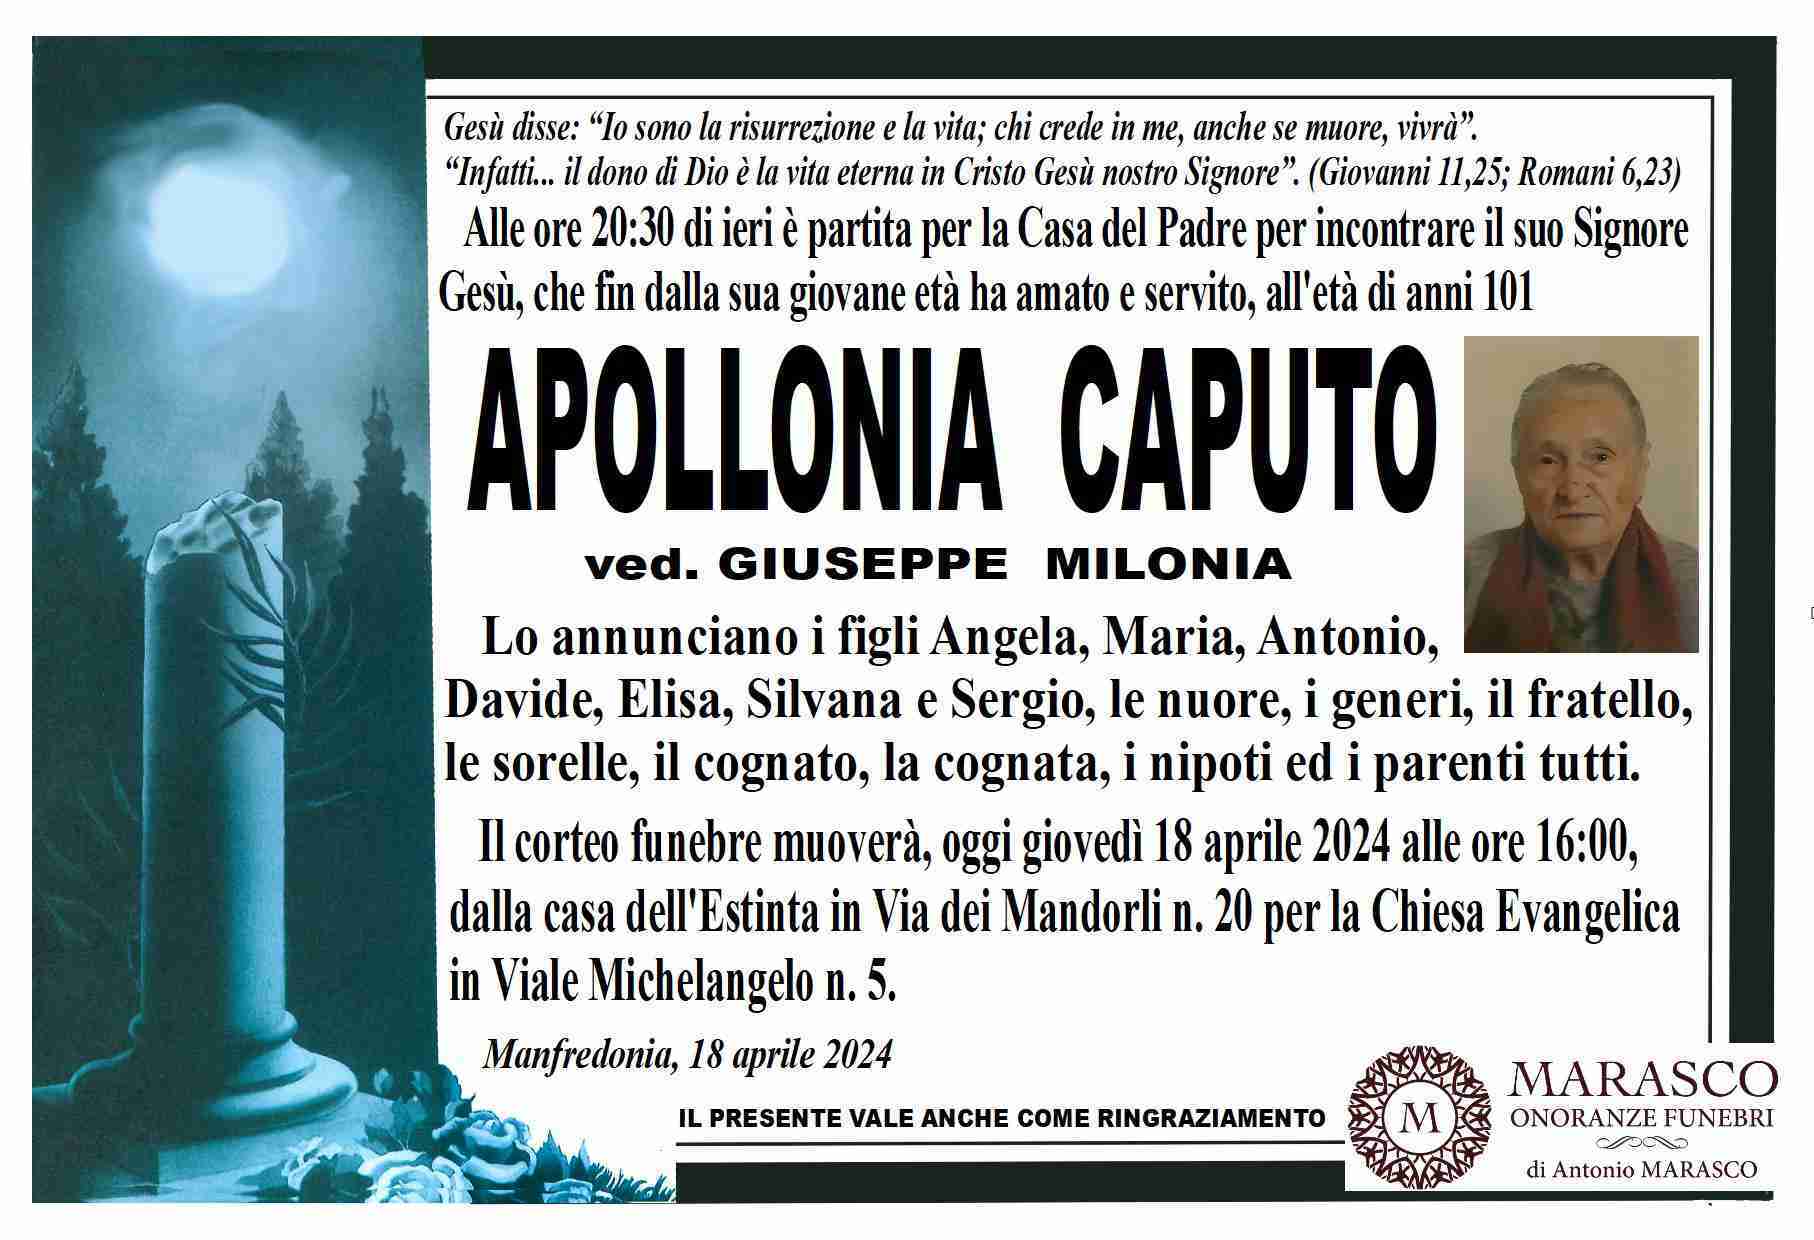 Apollonia Caputo